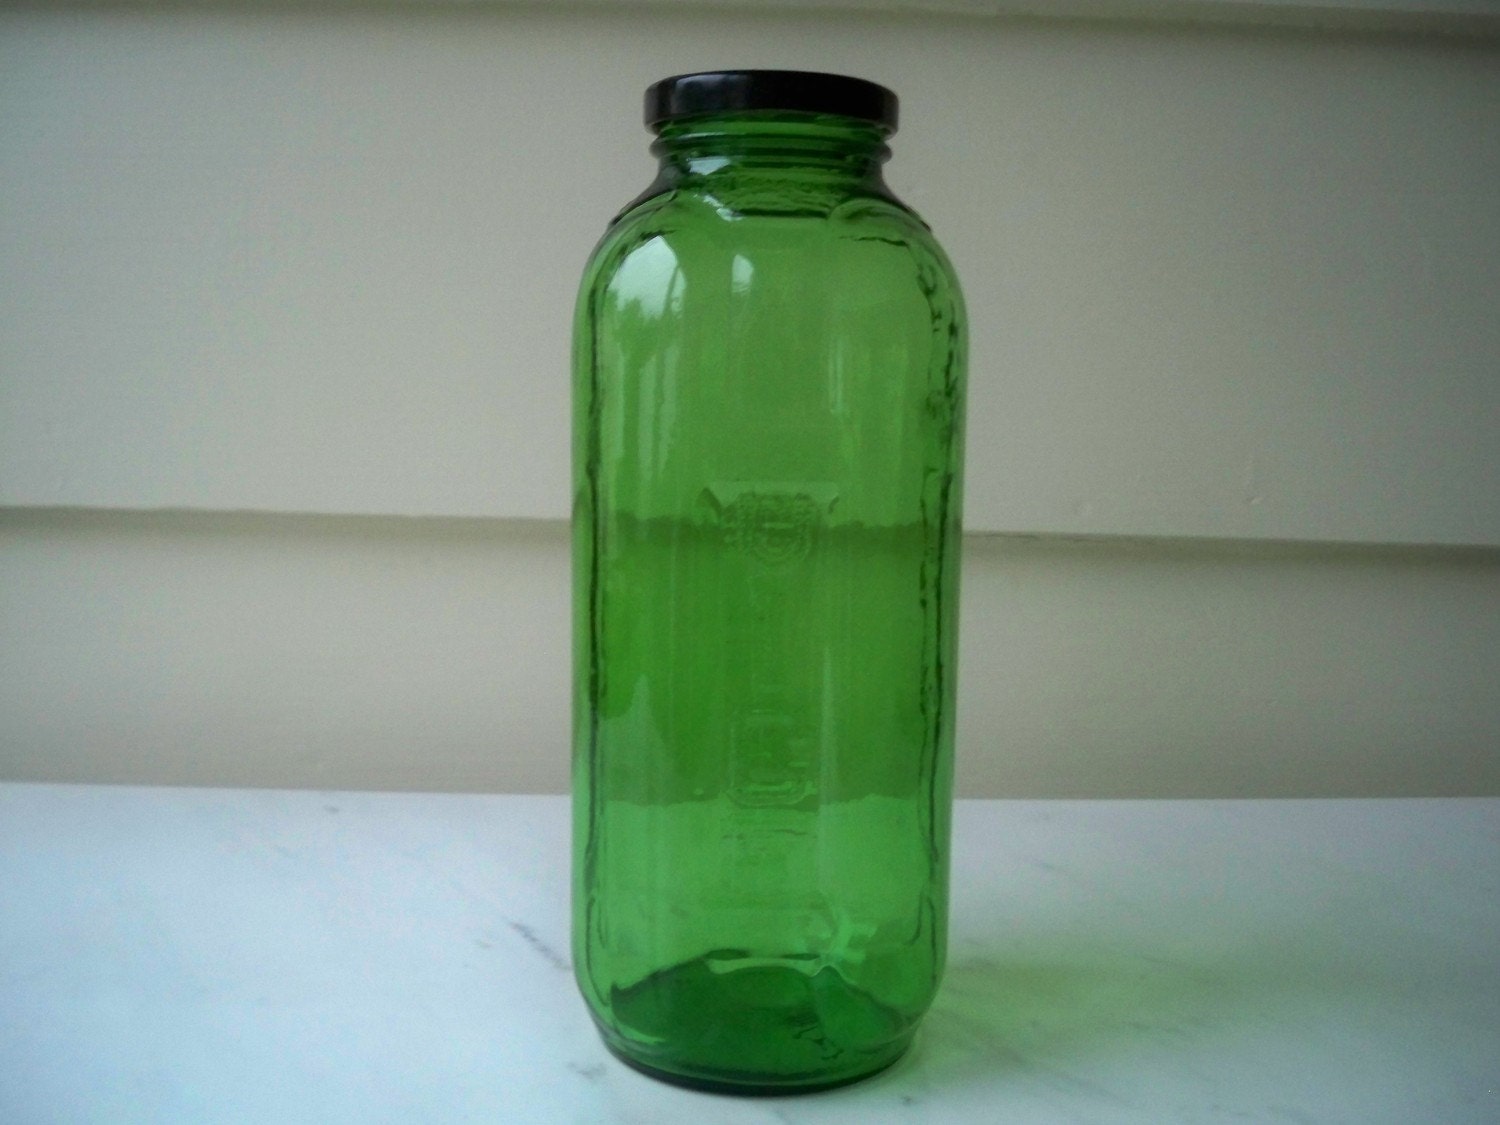 Emerald green glass juice/water bottle with black metal lid